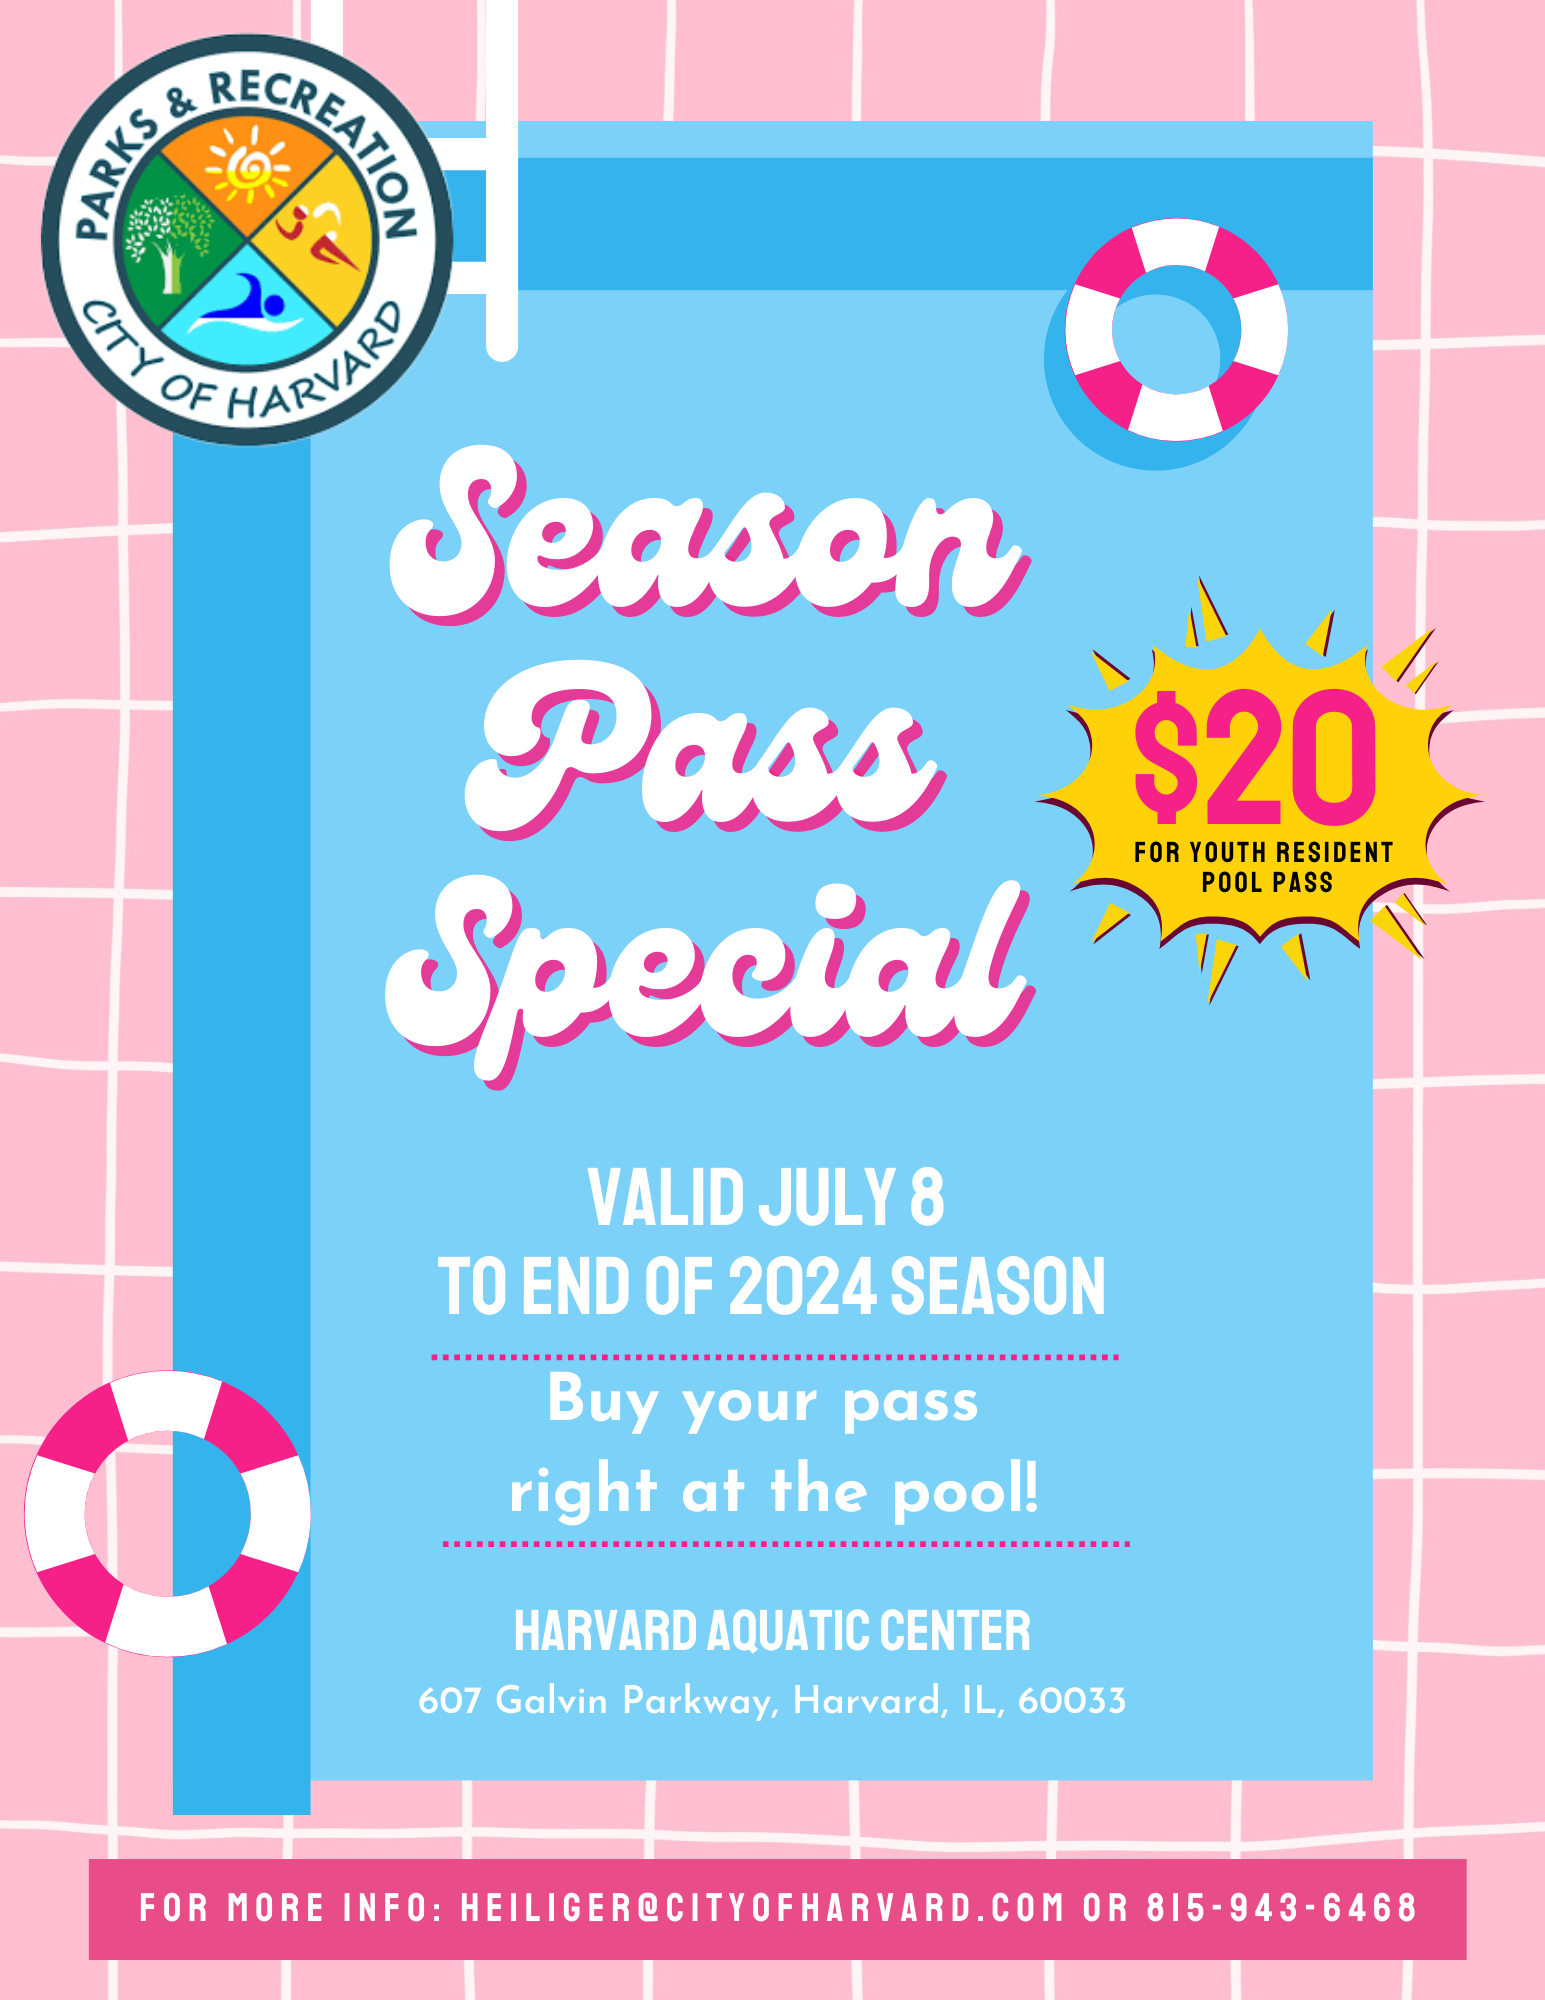 Season Pool Pass Special